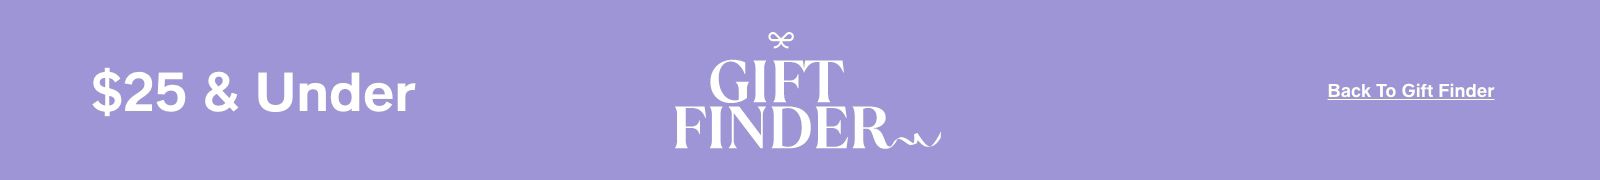 $25 and Under, Gift Finder